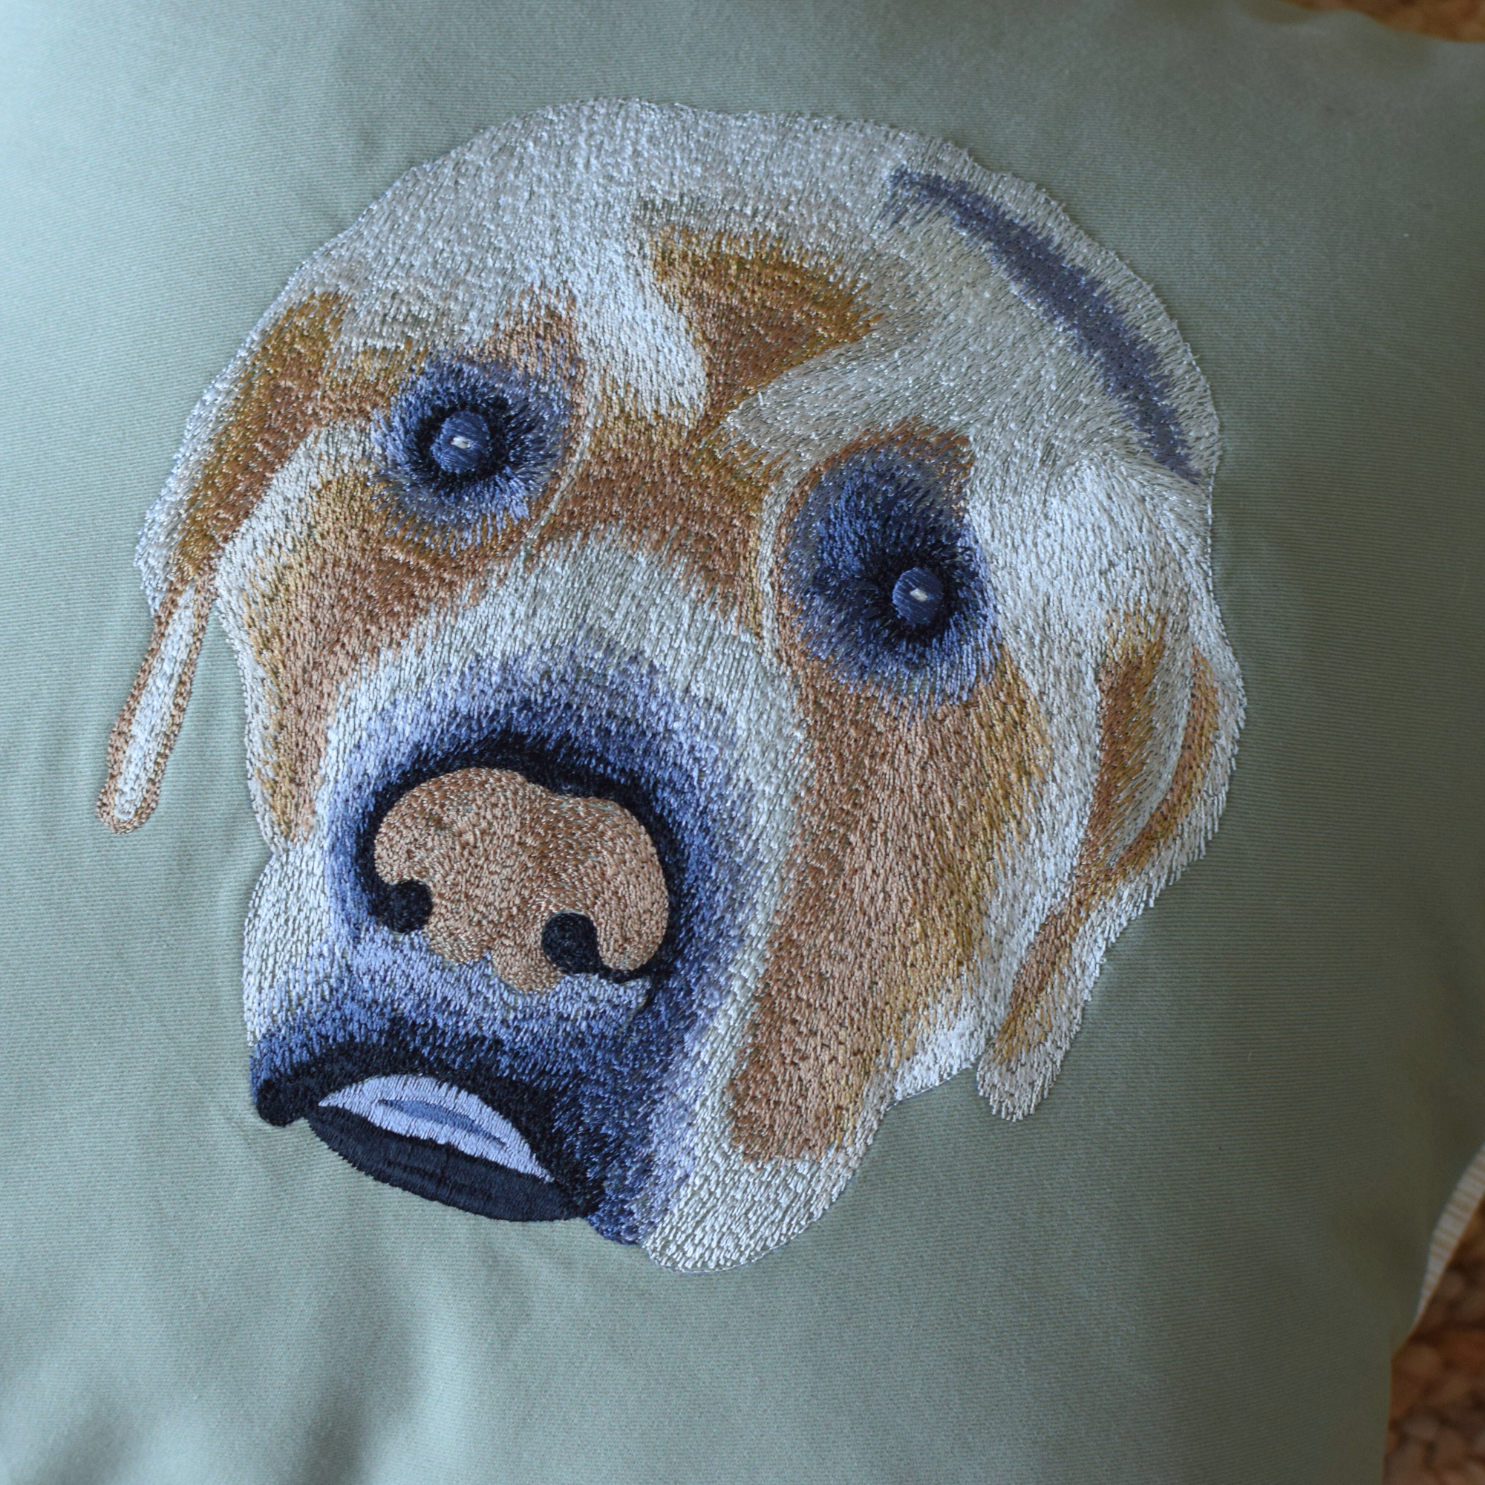 Customized dog cushions Dubai | Cushions with dog face embroidery Dubai